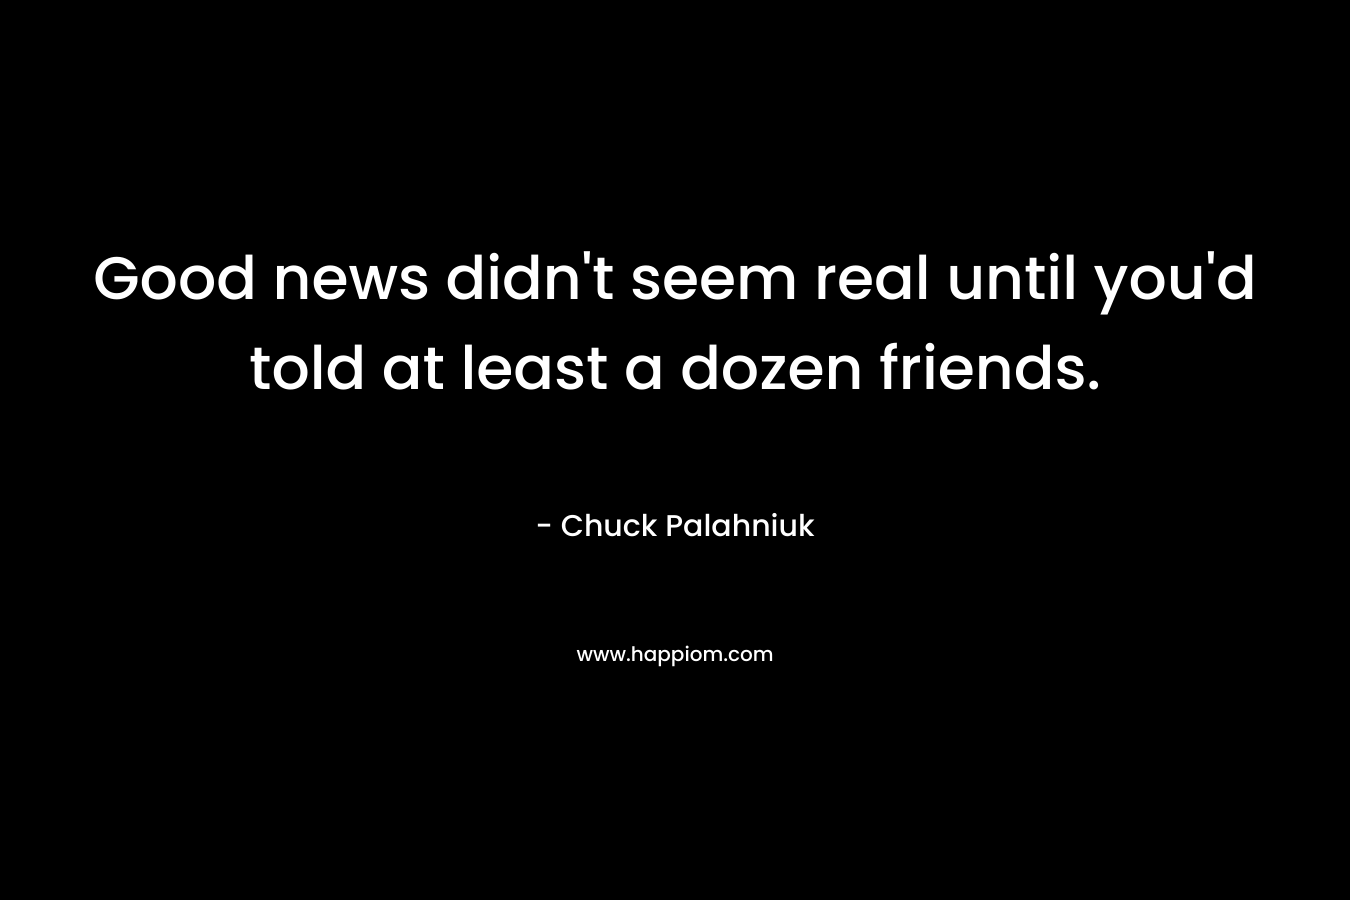 Good news didn’t seem real until you’d told at least a dozen friends. – Chuck Palahniuk